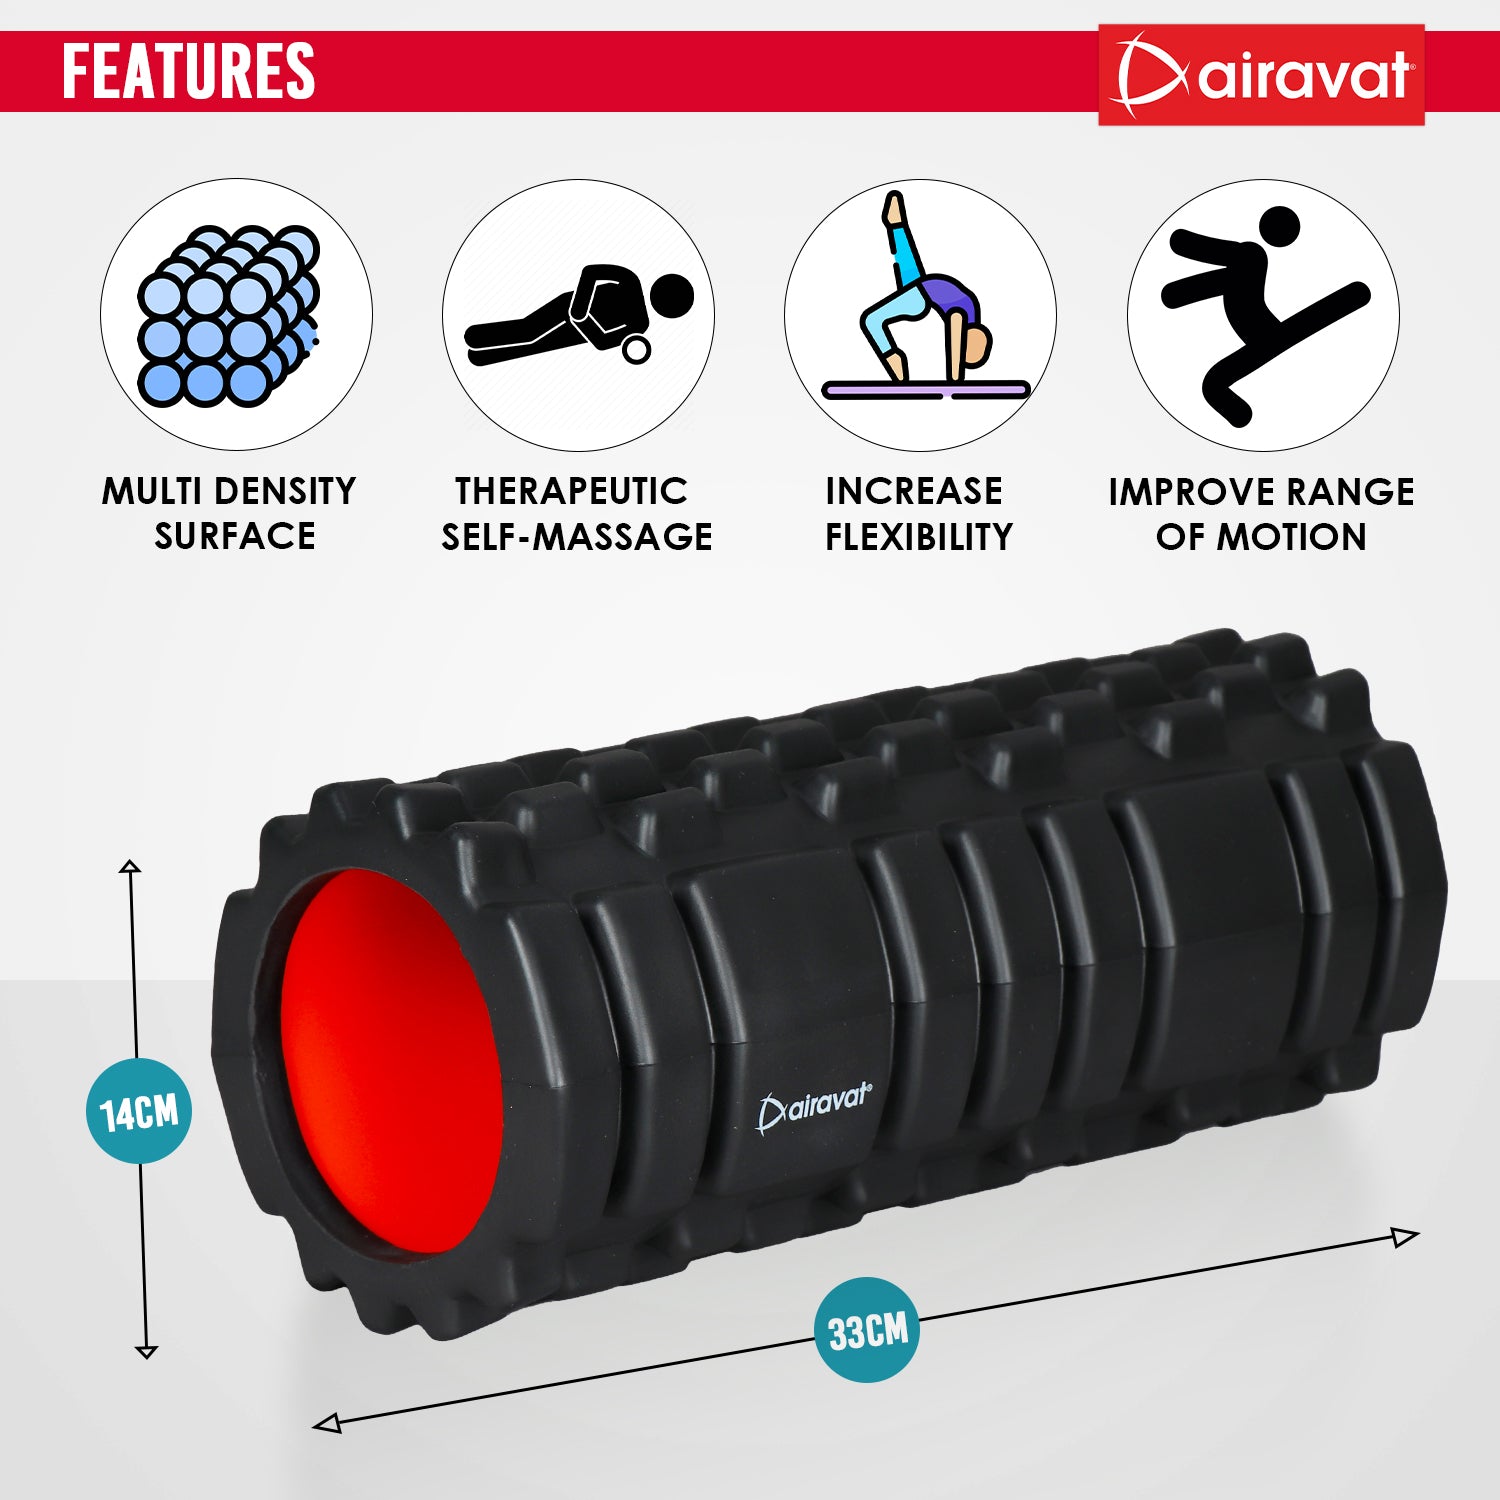 Yoga Foam roller features black